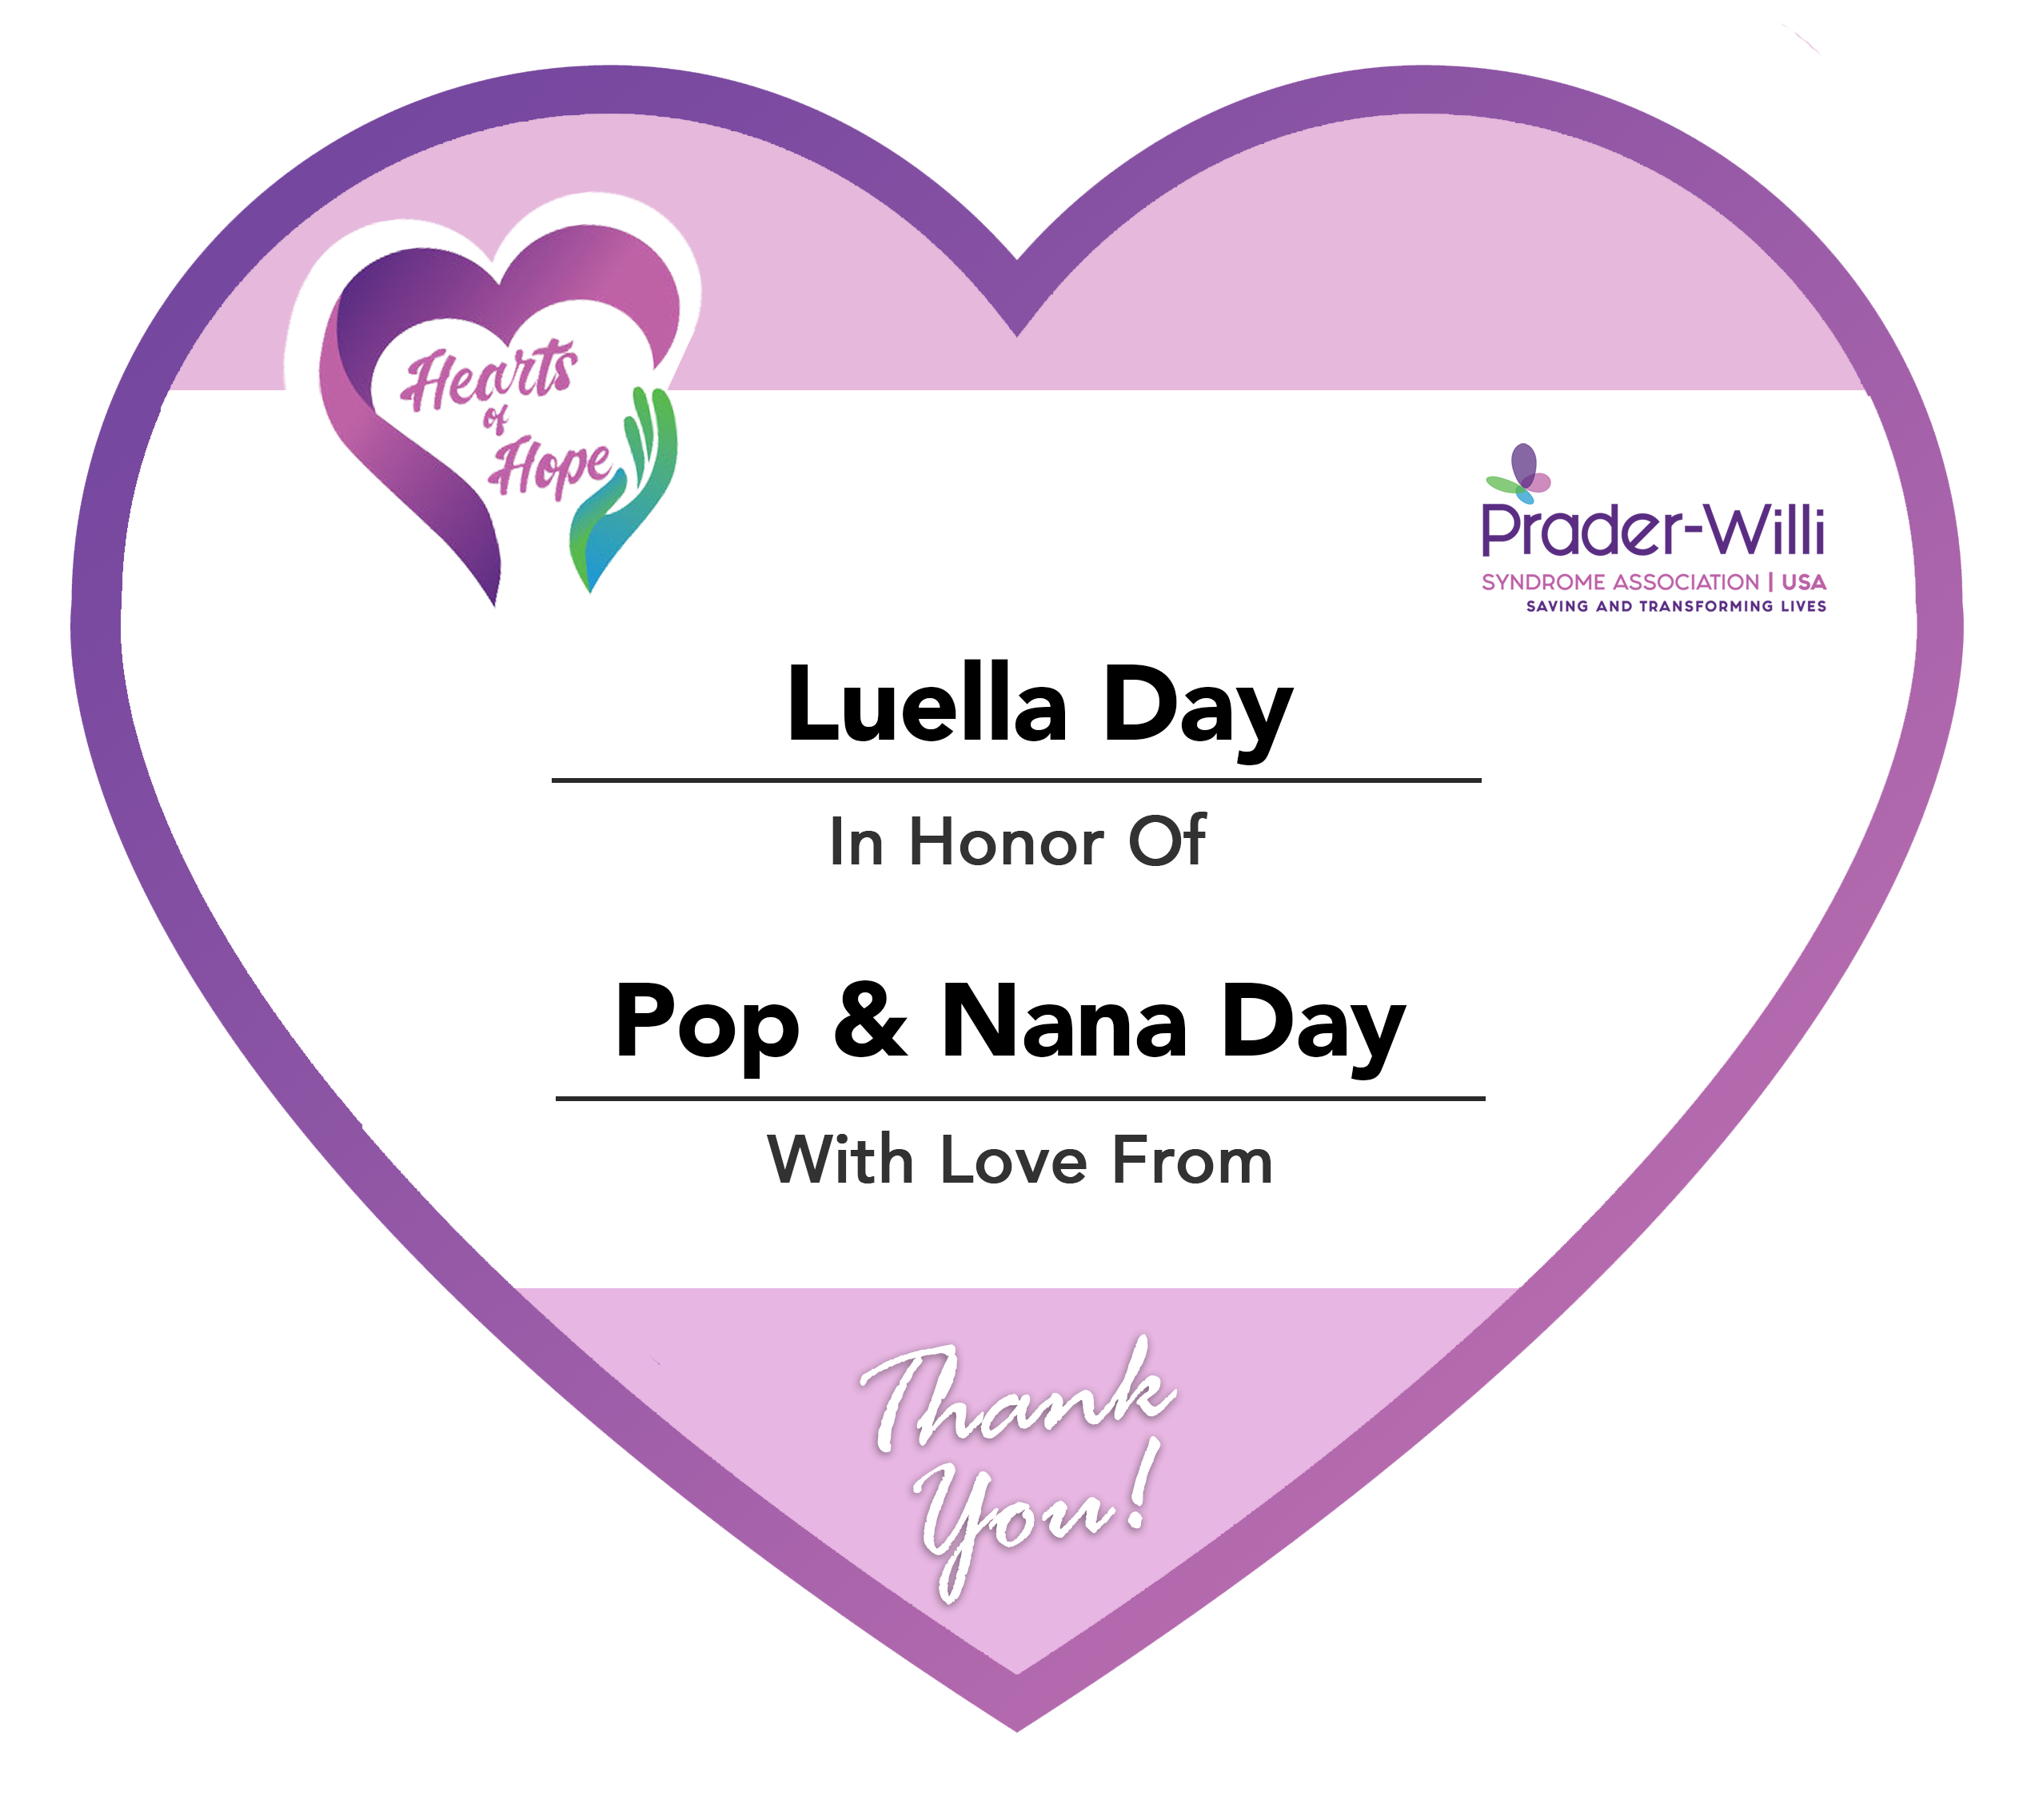 PWSA Paperheart LuellaDay2, Prader-Willi Syndrome Association | USA